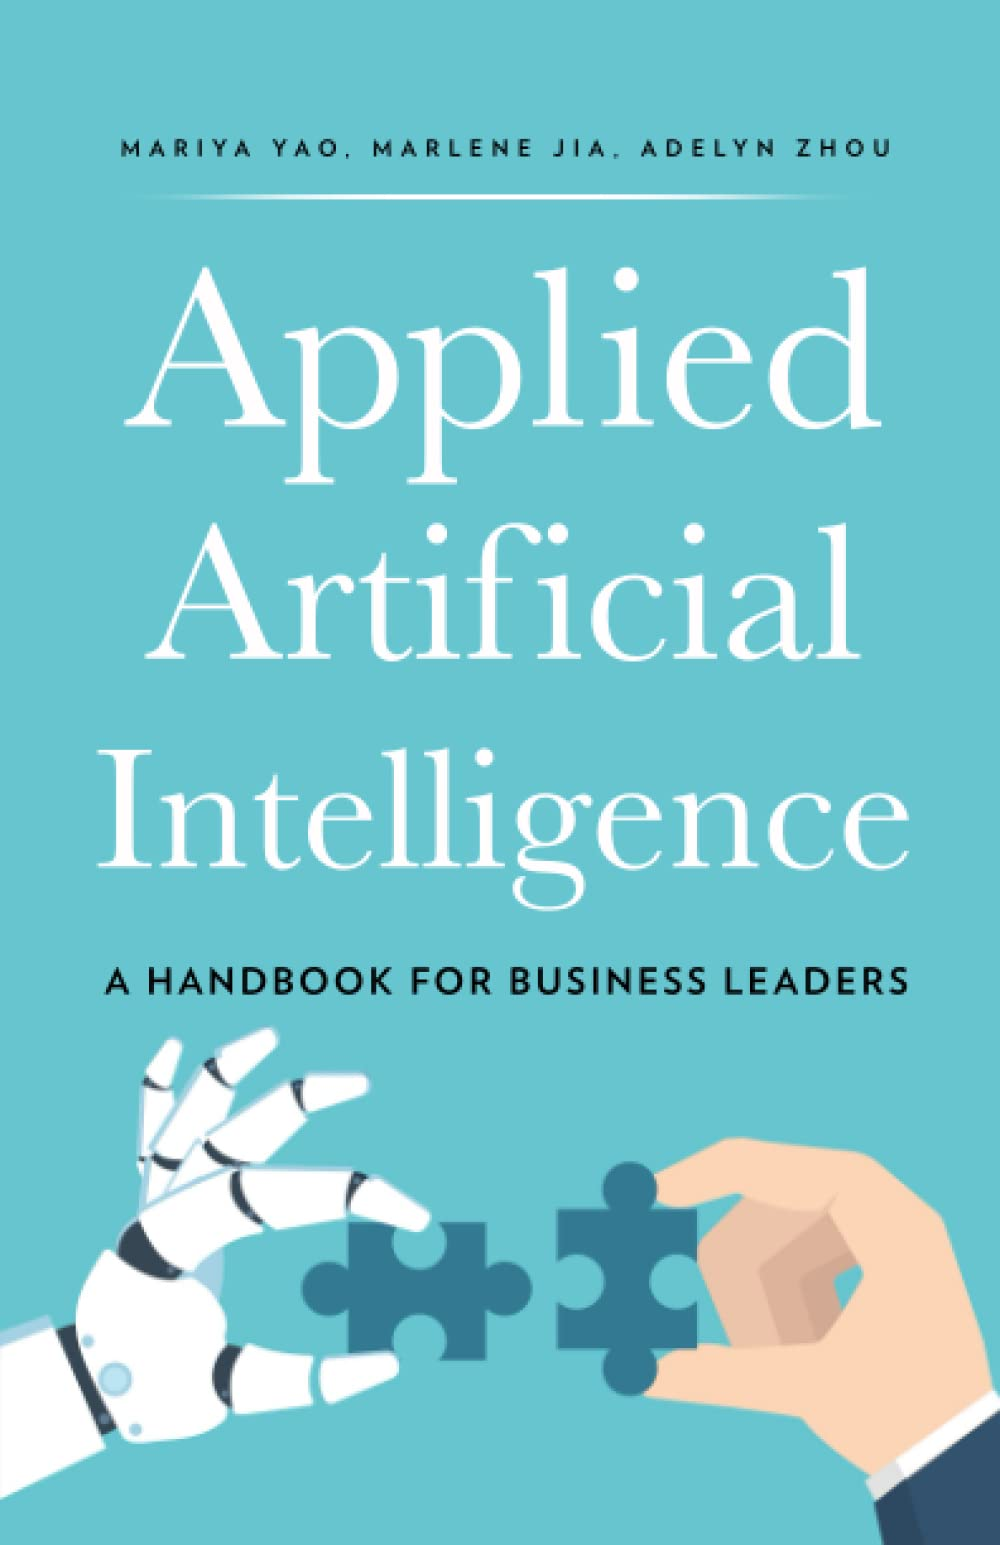 Book cover: Applied Artificial Intelligence by Mariya Yao, Adelyn Zhou, and Marlene Jia